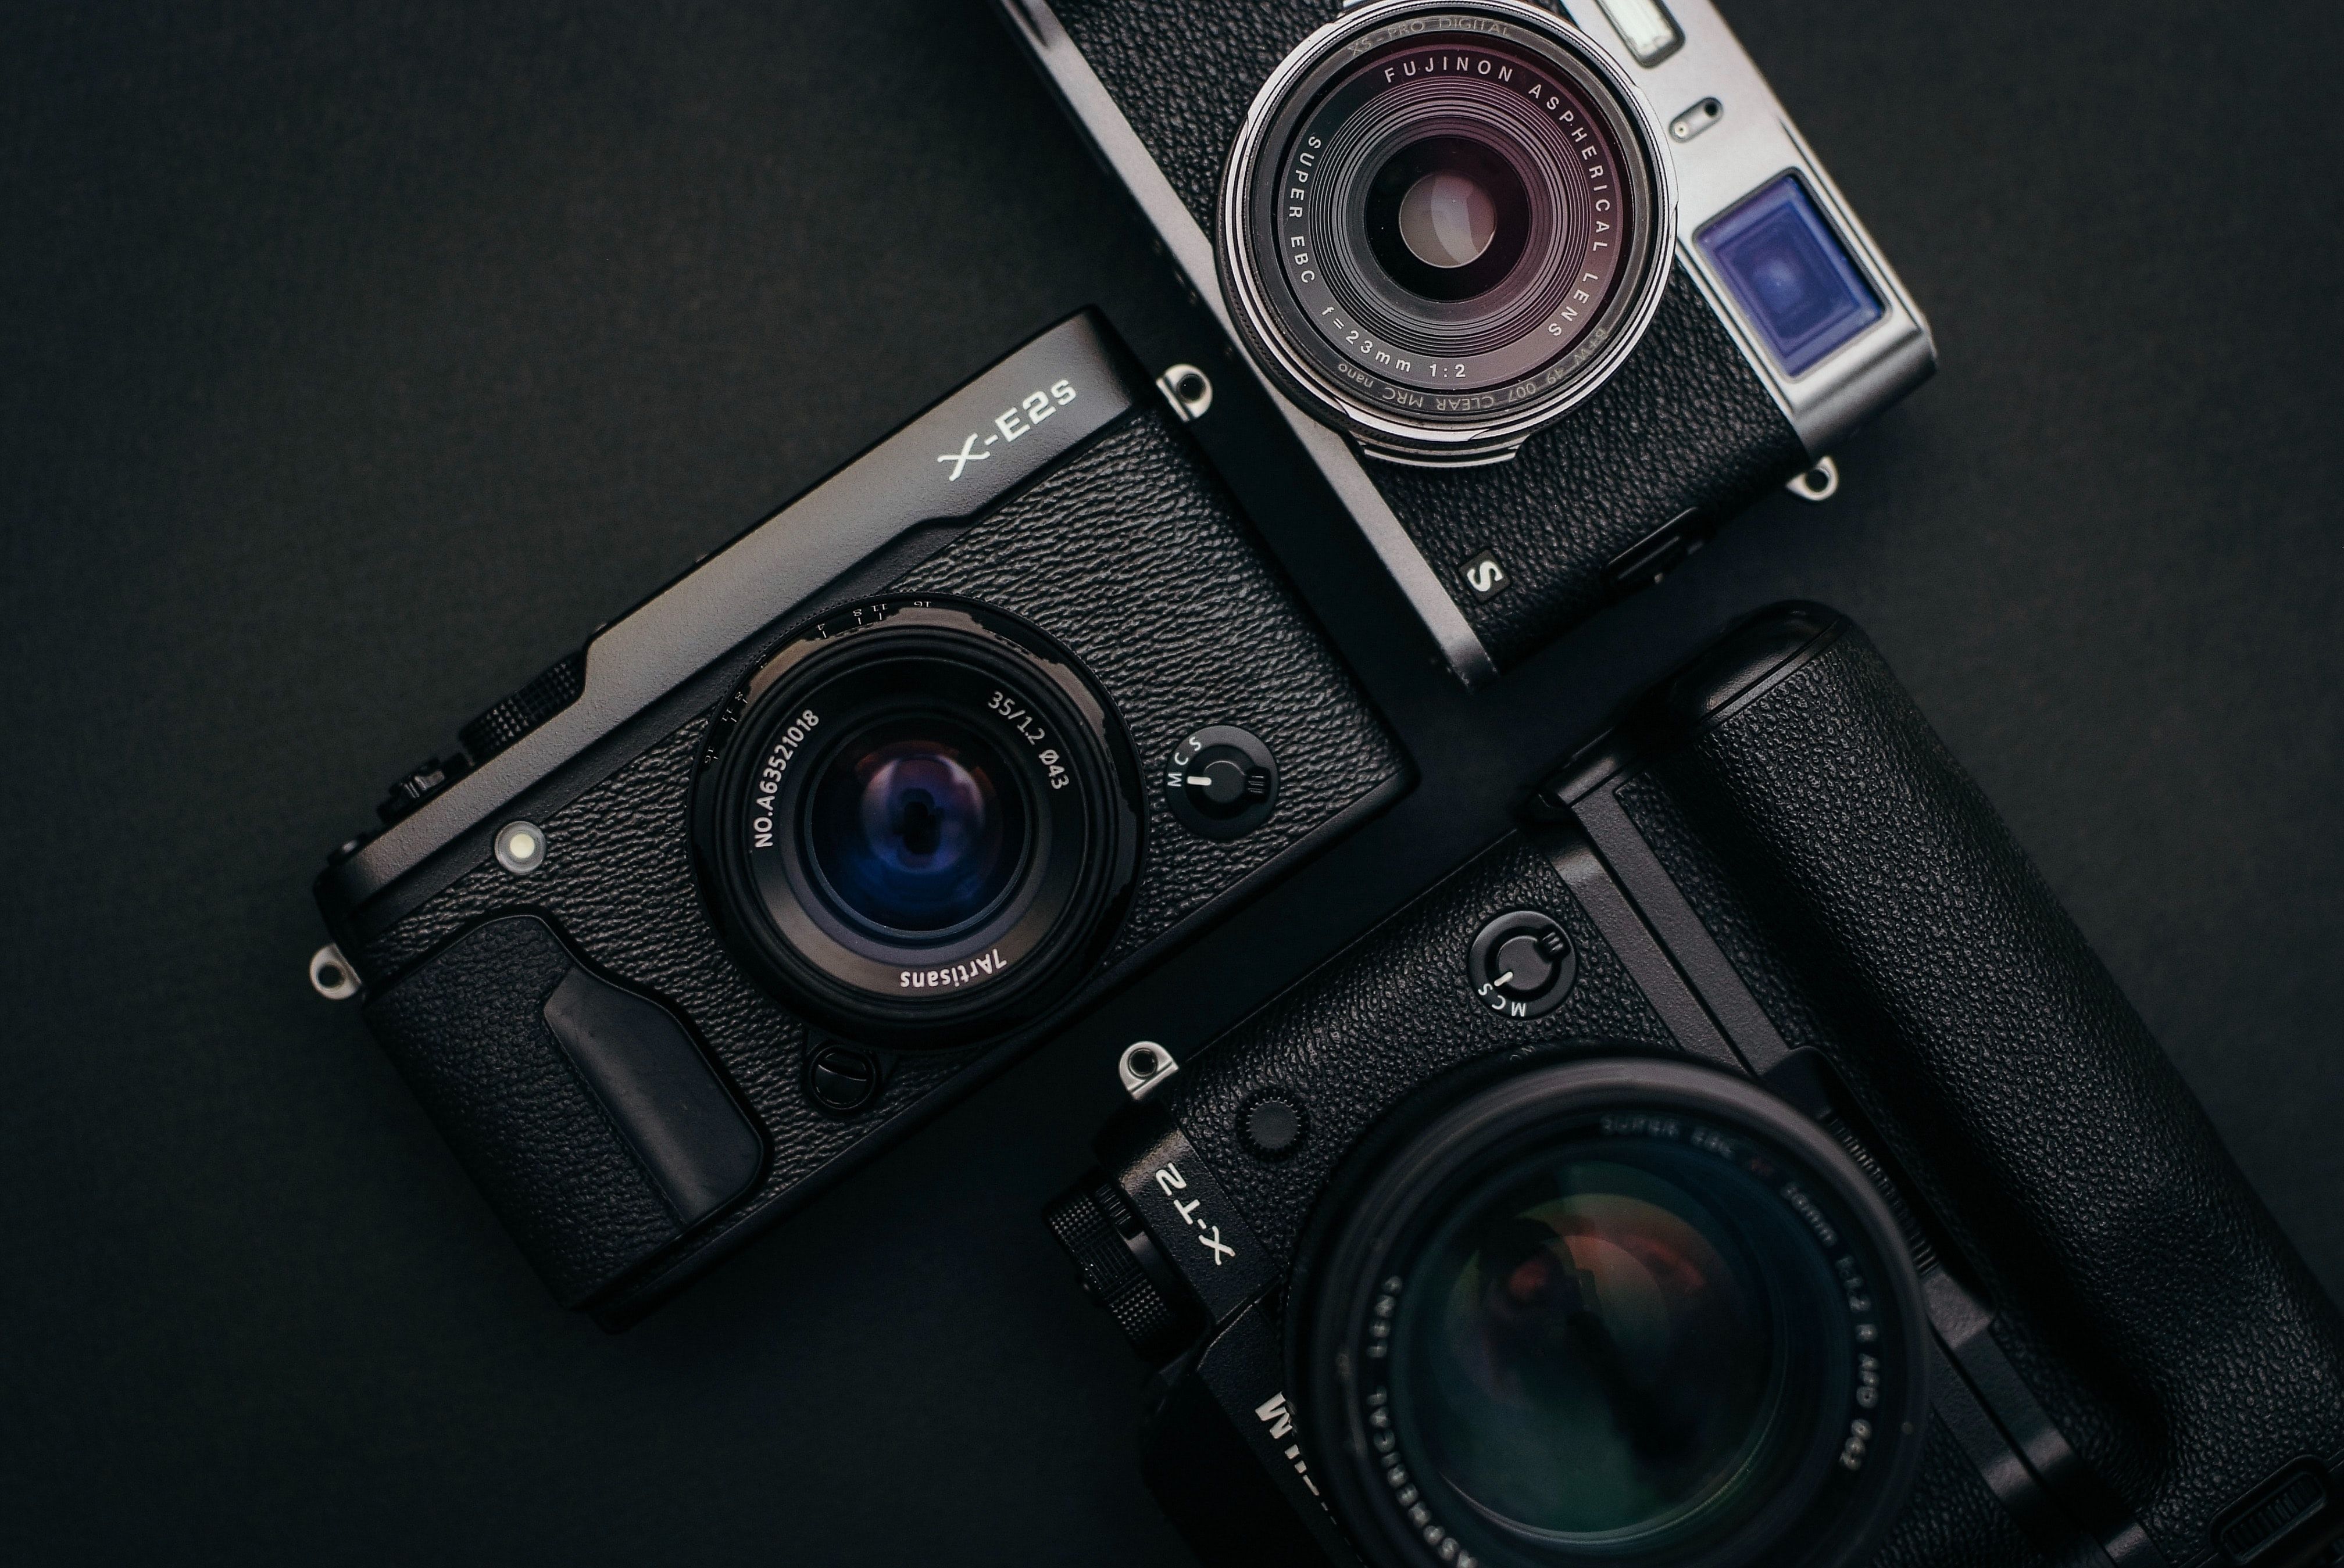 fujifilm camera models - 7 cose da sapere quando si acquista una fotocamera Fujifilm